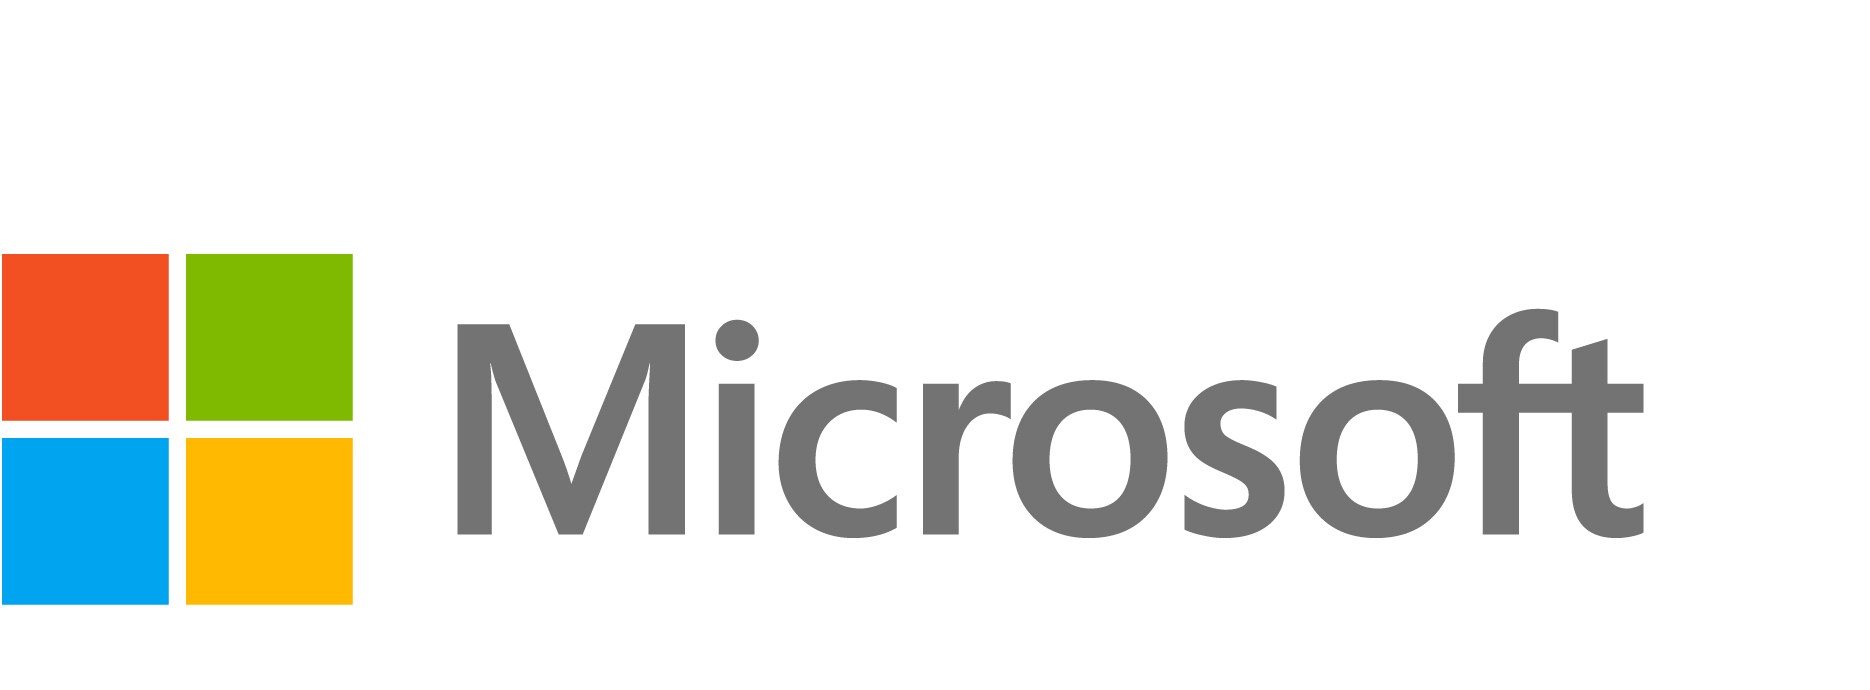 Microsoft Windows Server Datacenter Edition - software assurance - 16 cores